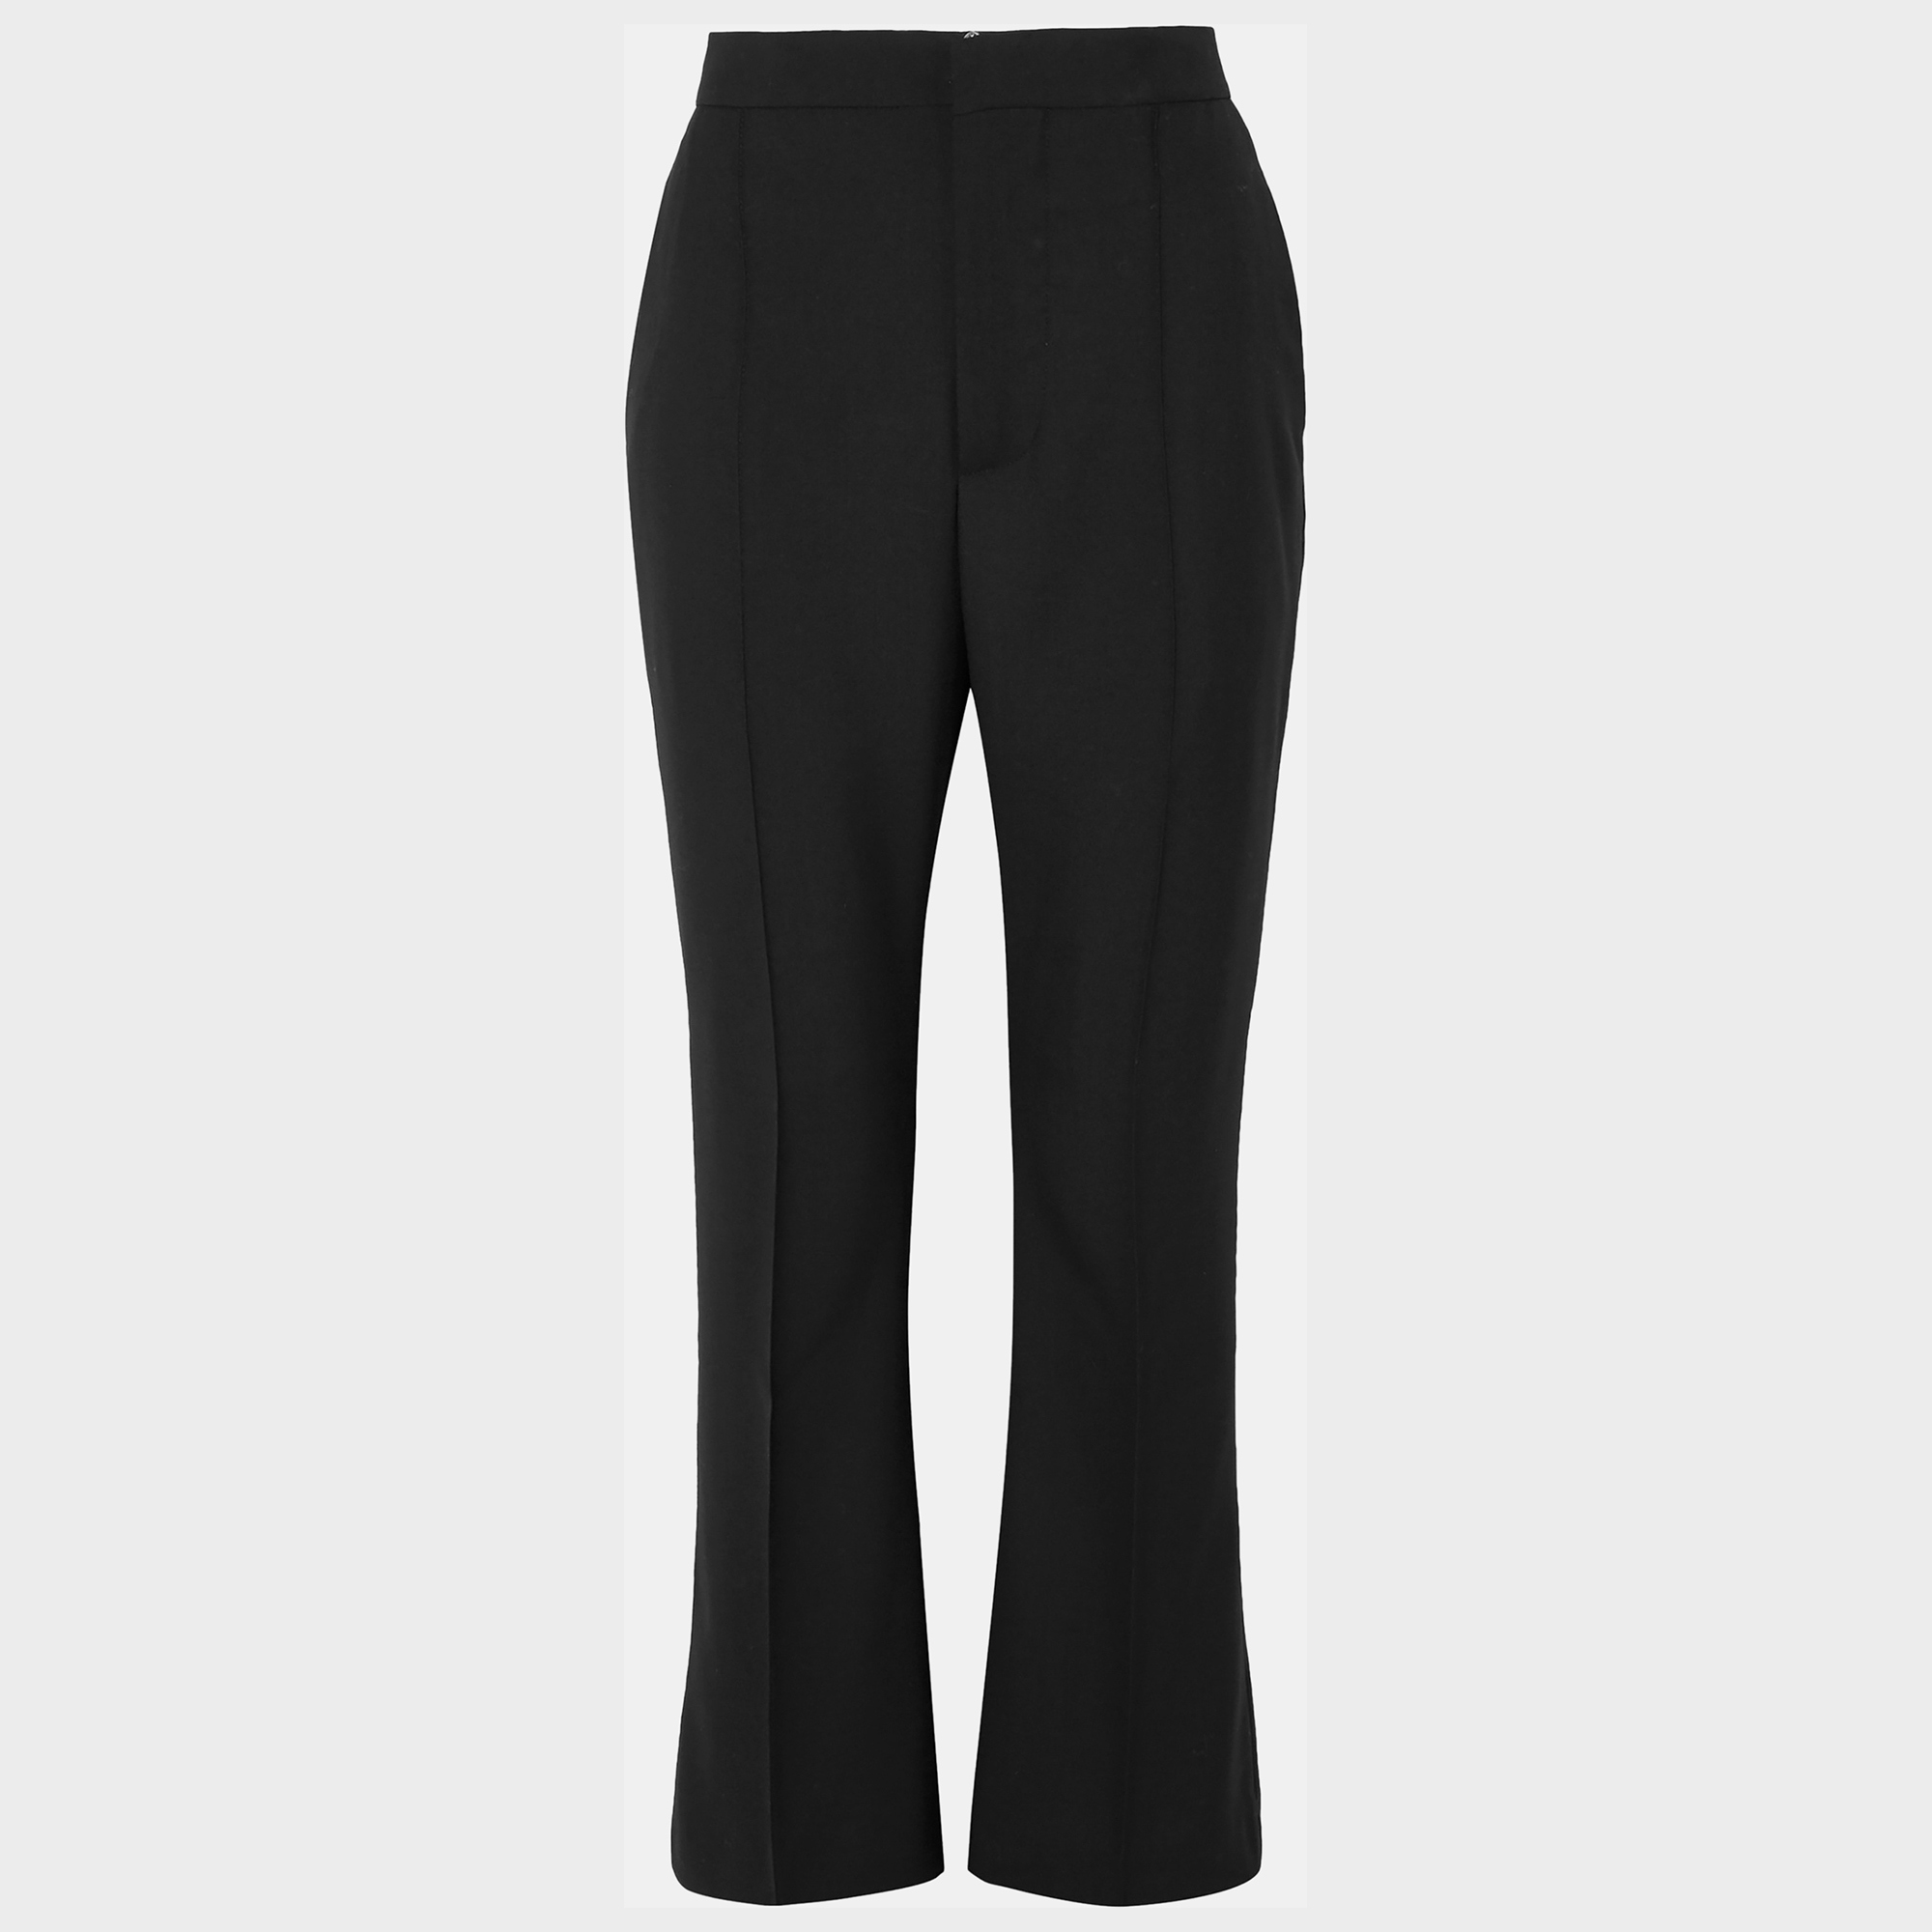 Marni black virgin wool flared trousers size 46